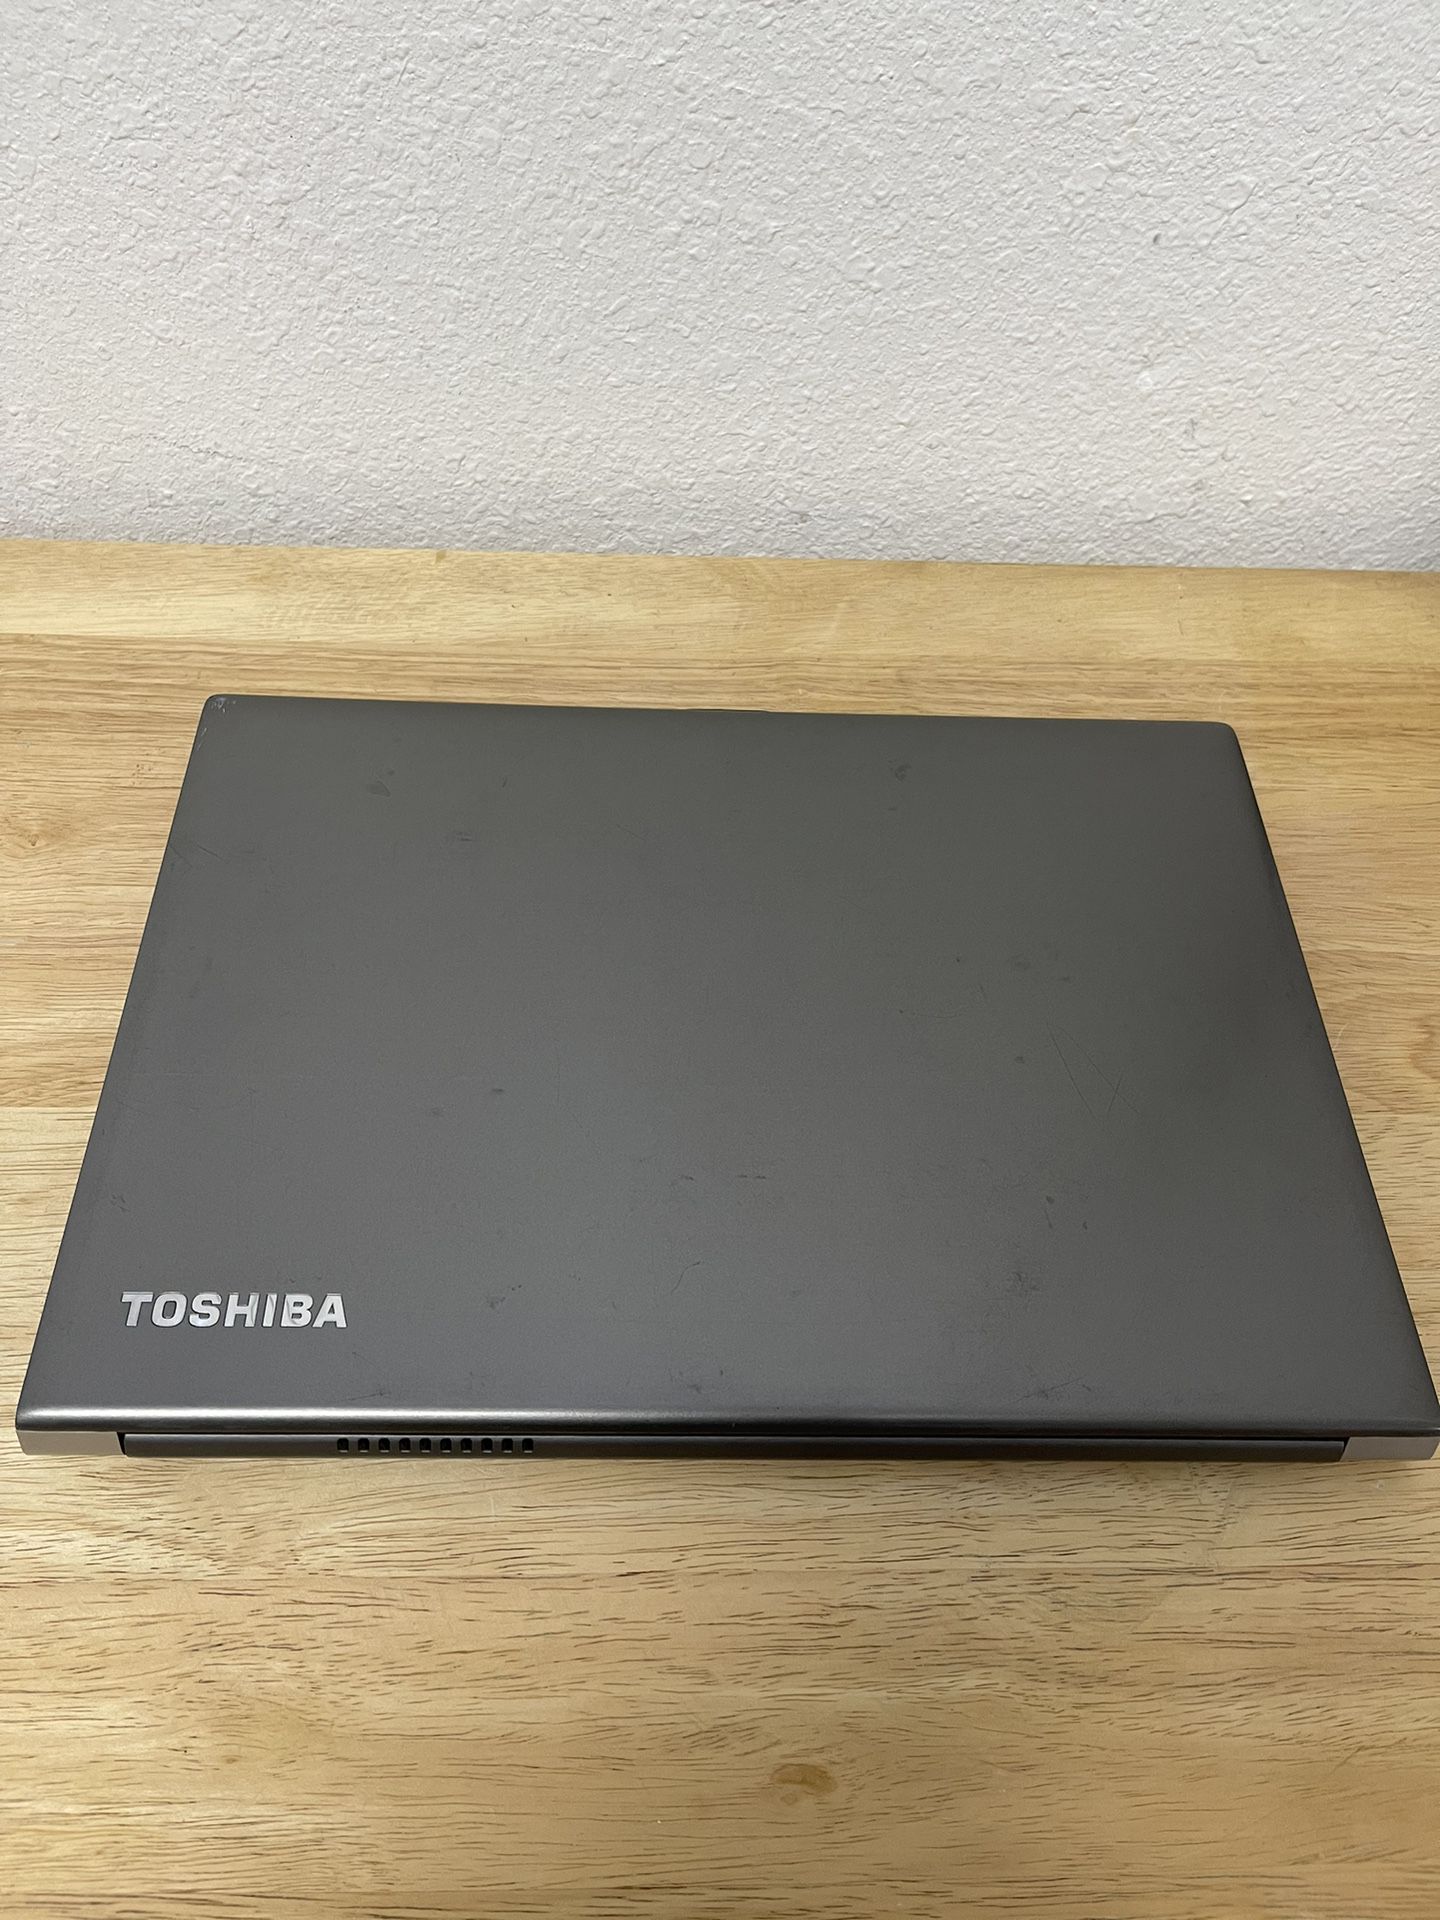 Toshiba Lap Top Windows